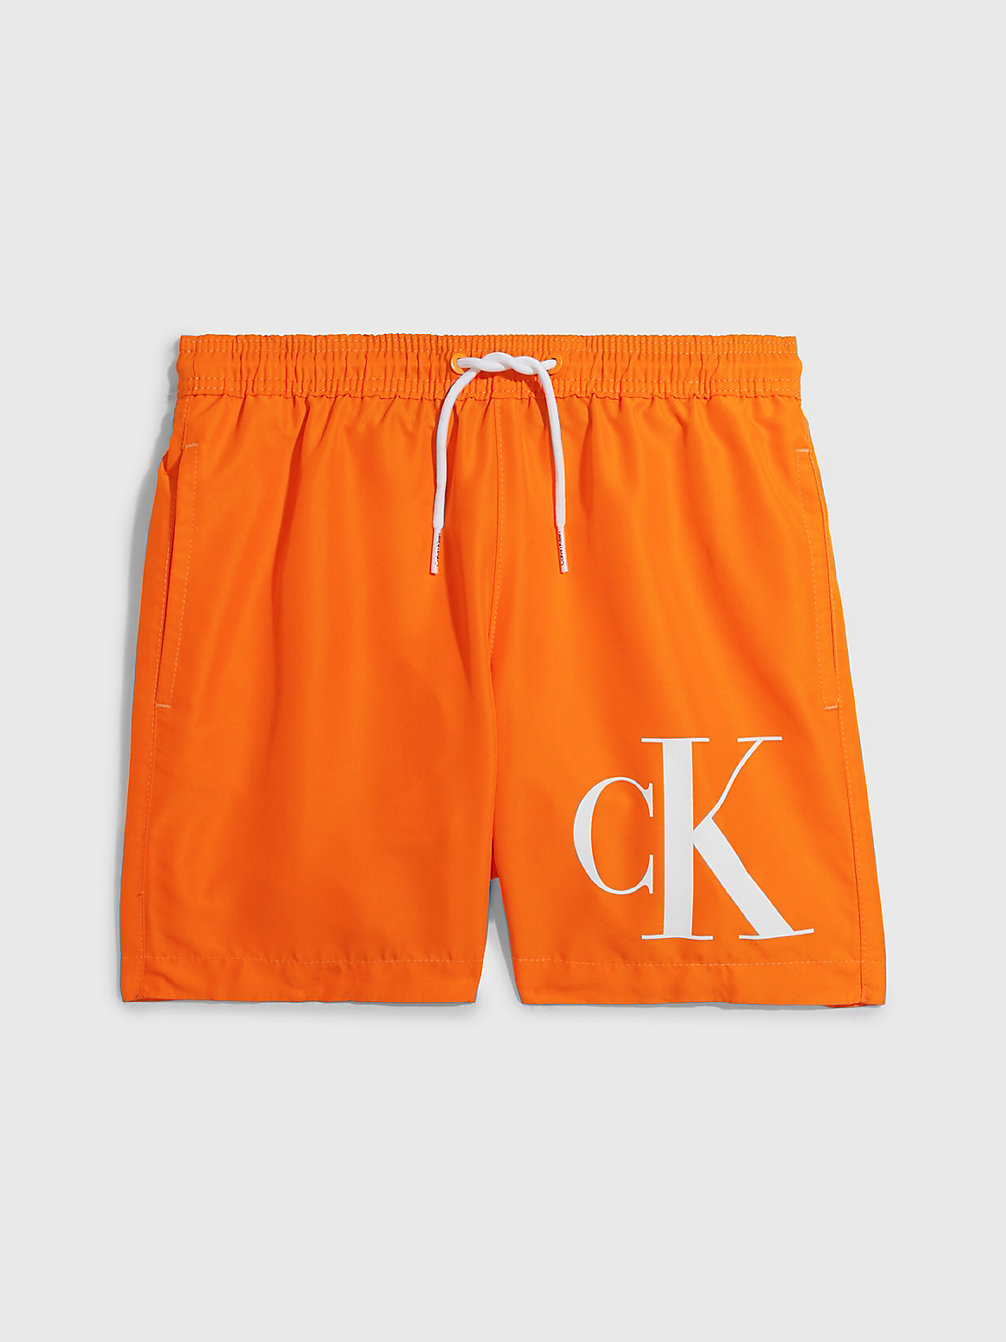 SUN KISSED ORANGE Boys Swim Shorts - CK Monogram undefined boys Calvin Klein